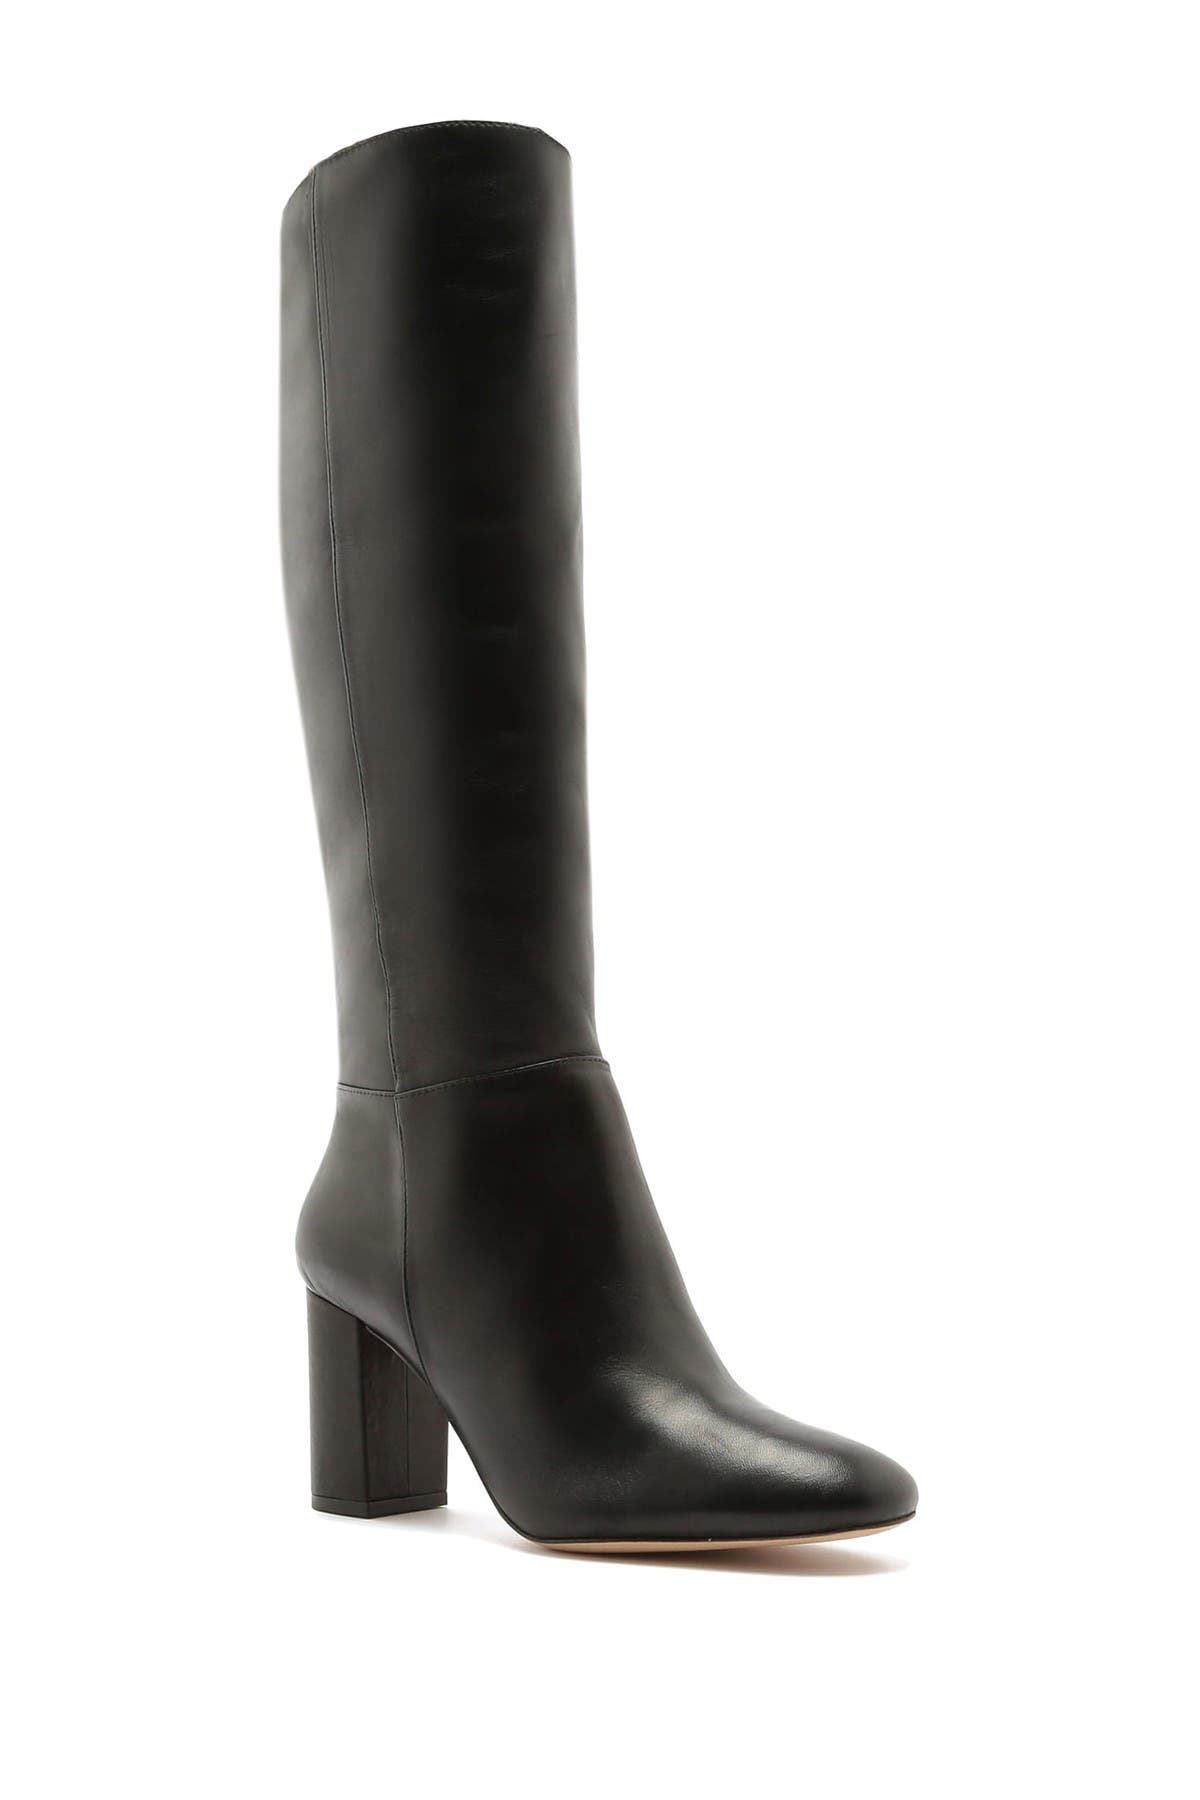 Schutz | Bonita Leather Knee High Boot 